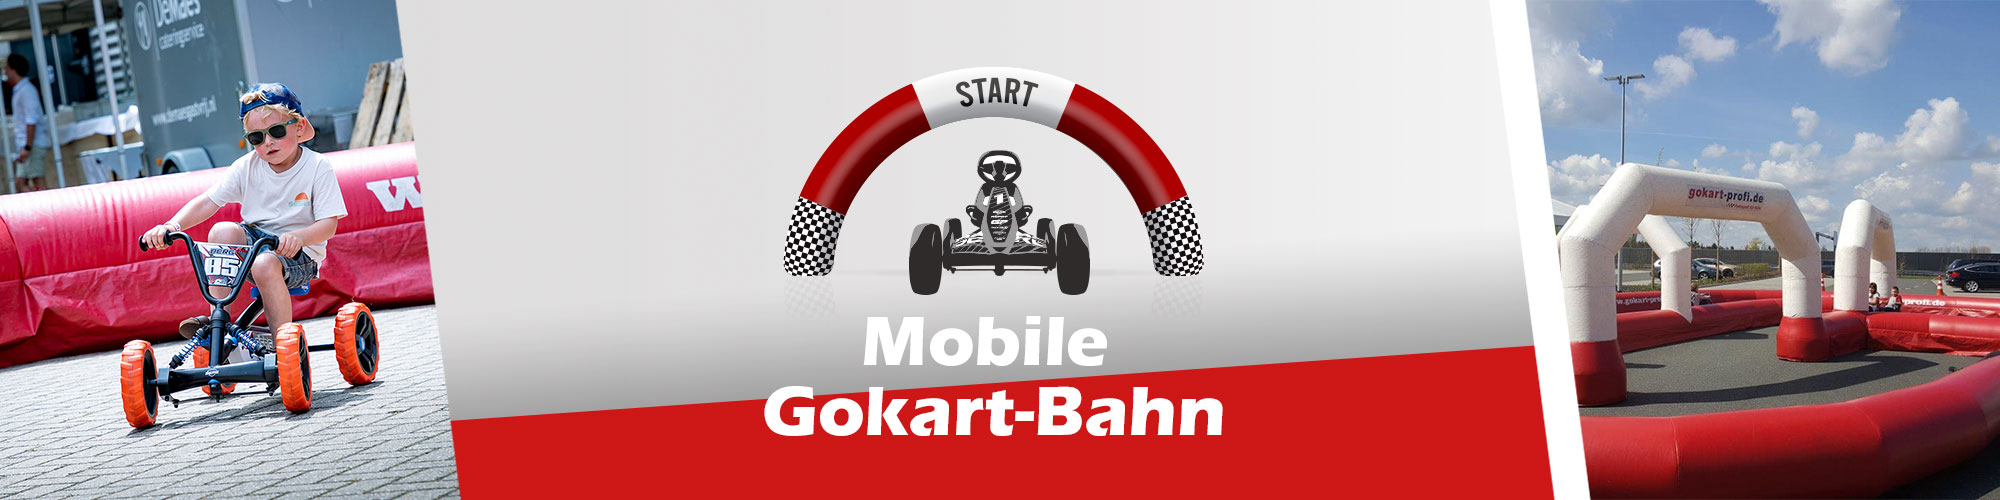 mobile Gokartbahn mieten